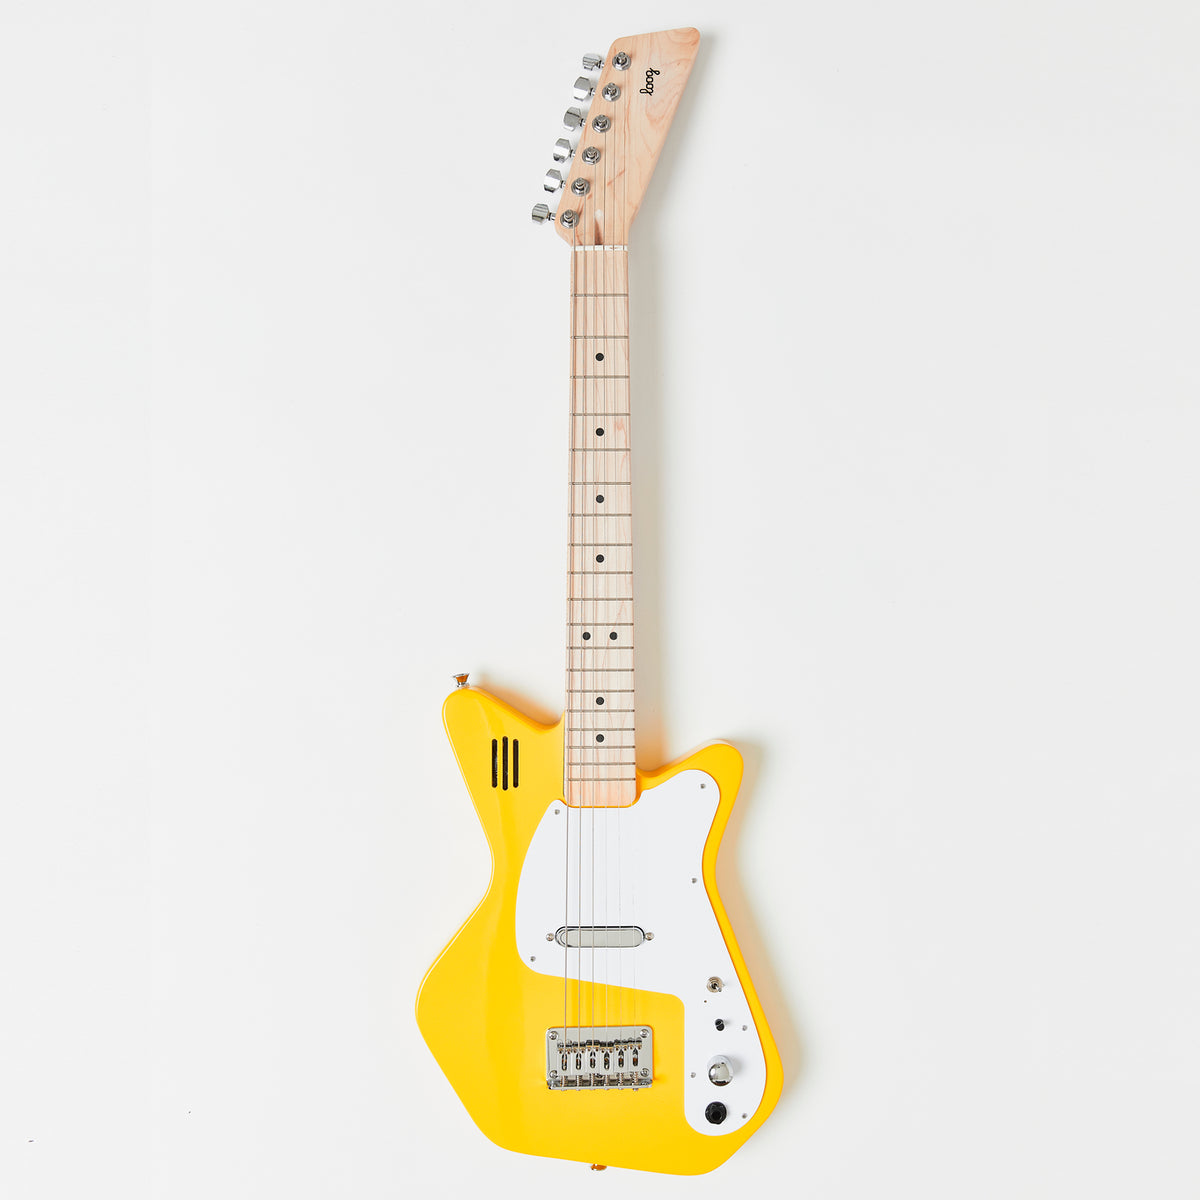 yellow-guitar-strap-gig-bag yellow-guitar-strap-wall-hanger yellow-guitar-strap-stand